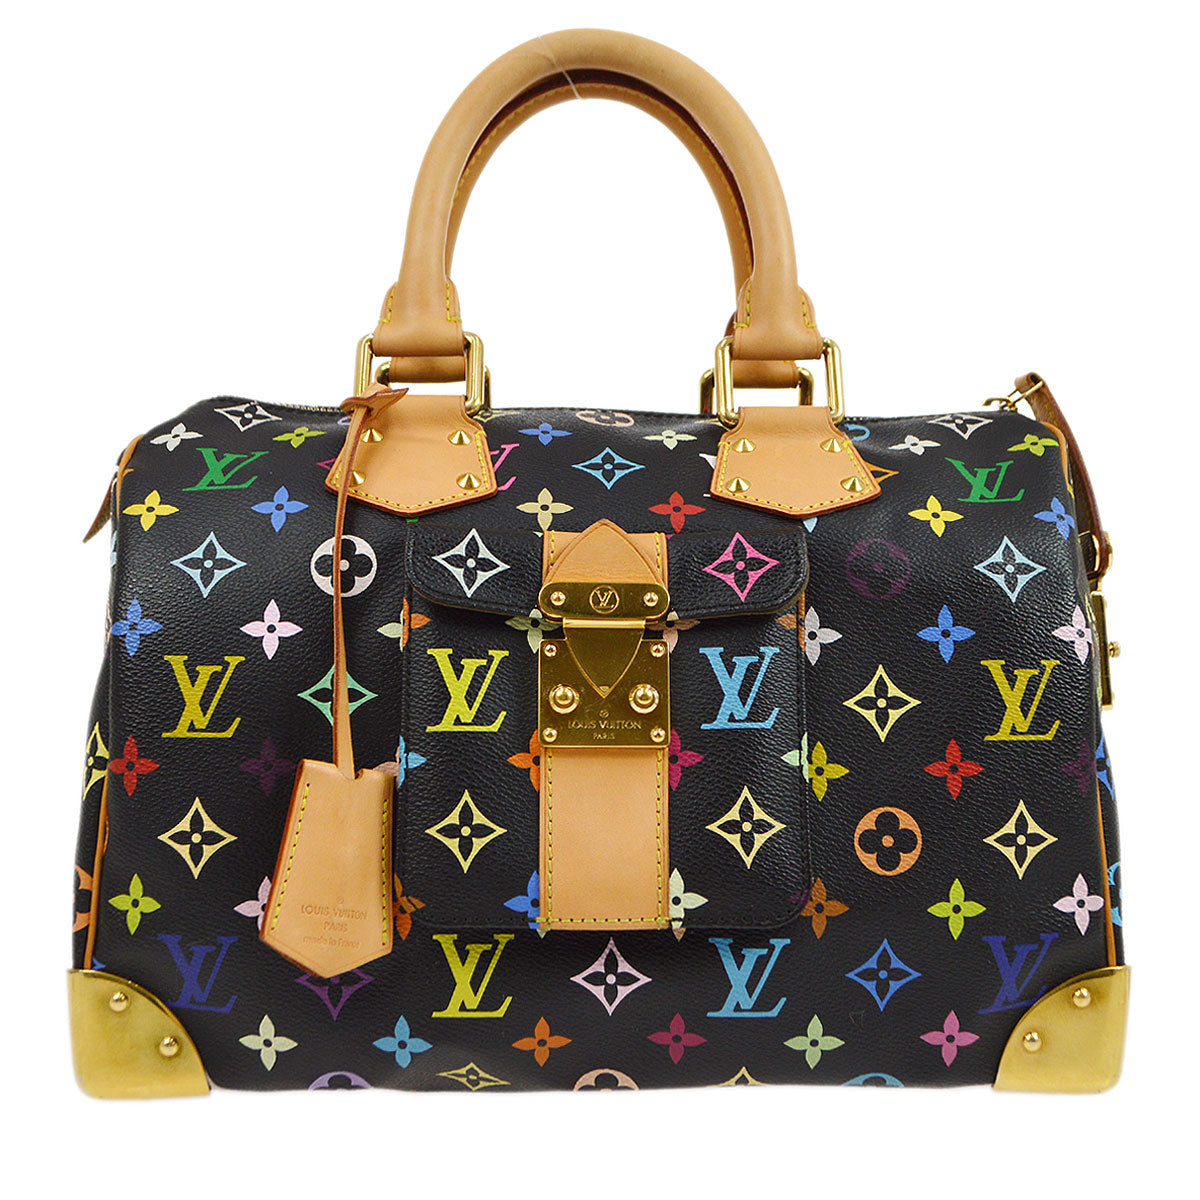 Louis Vuitton Speedy Handbag Size 30